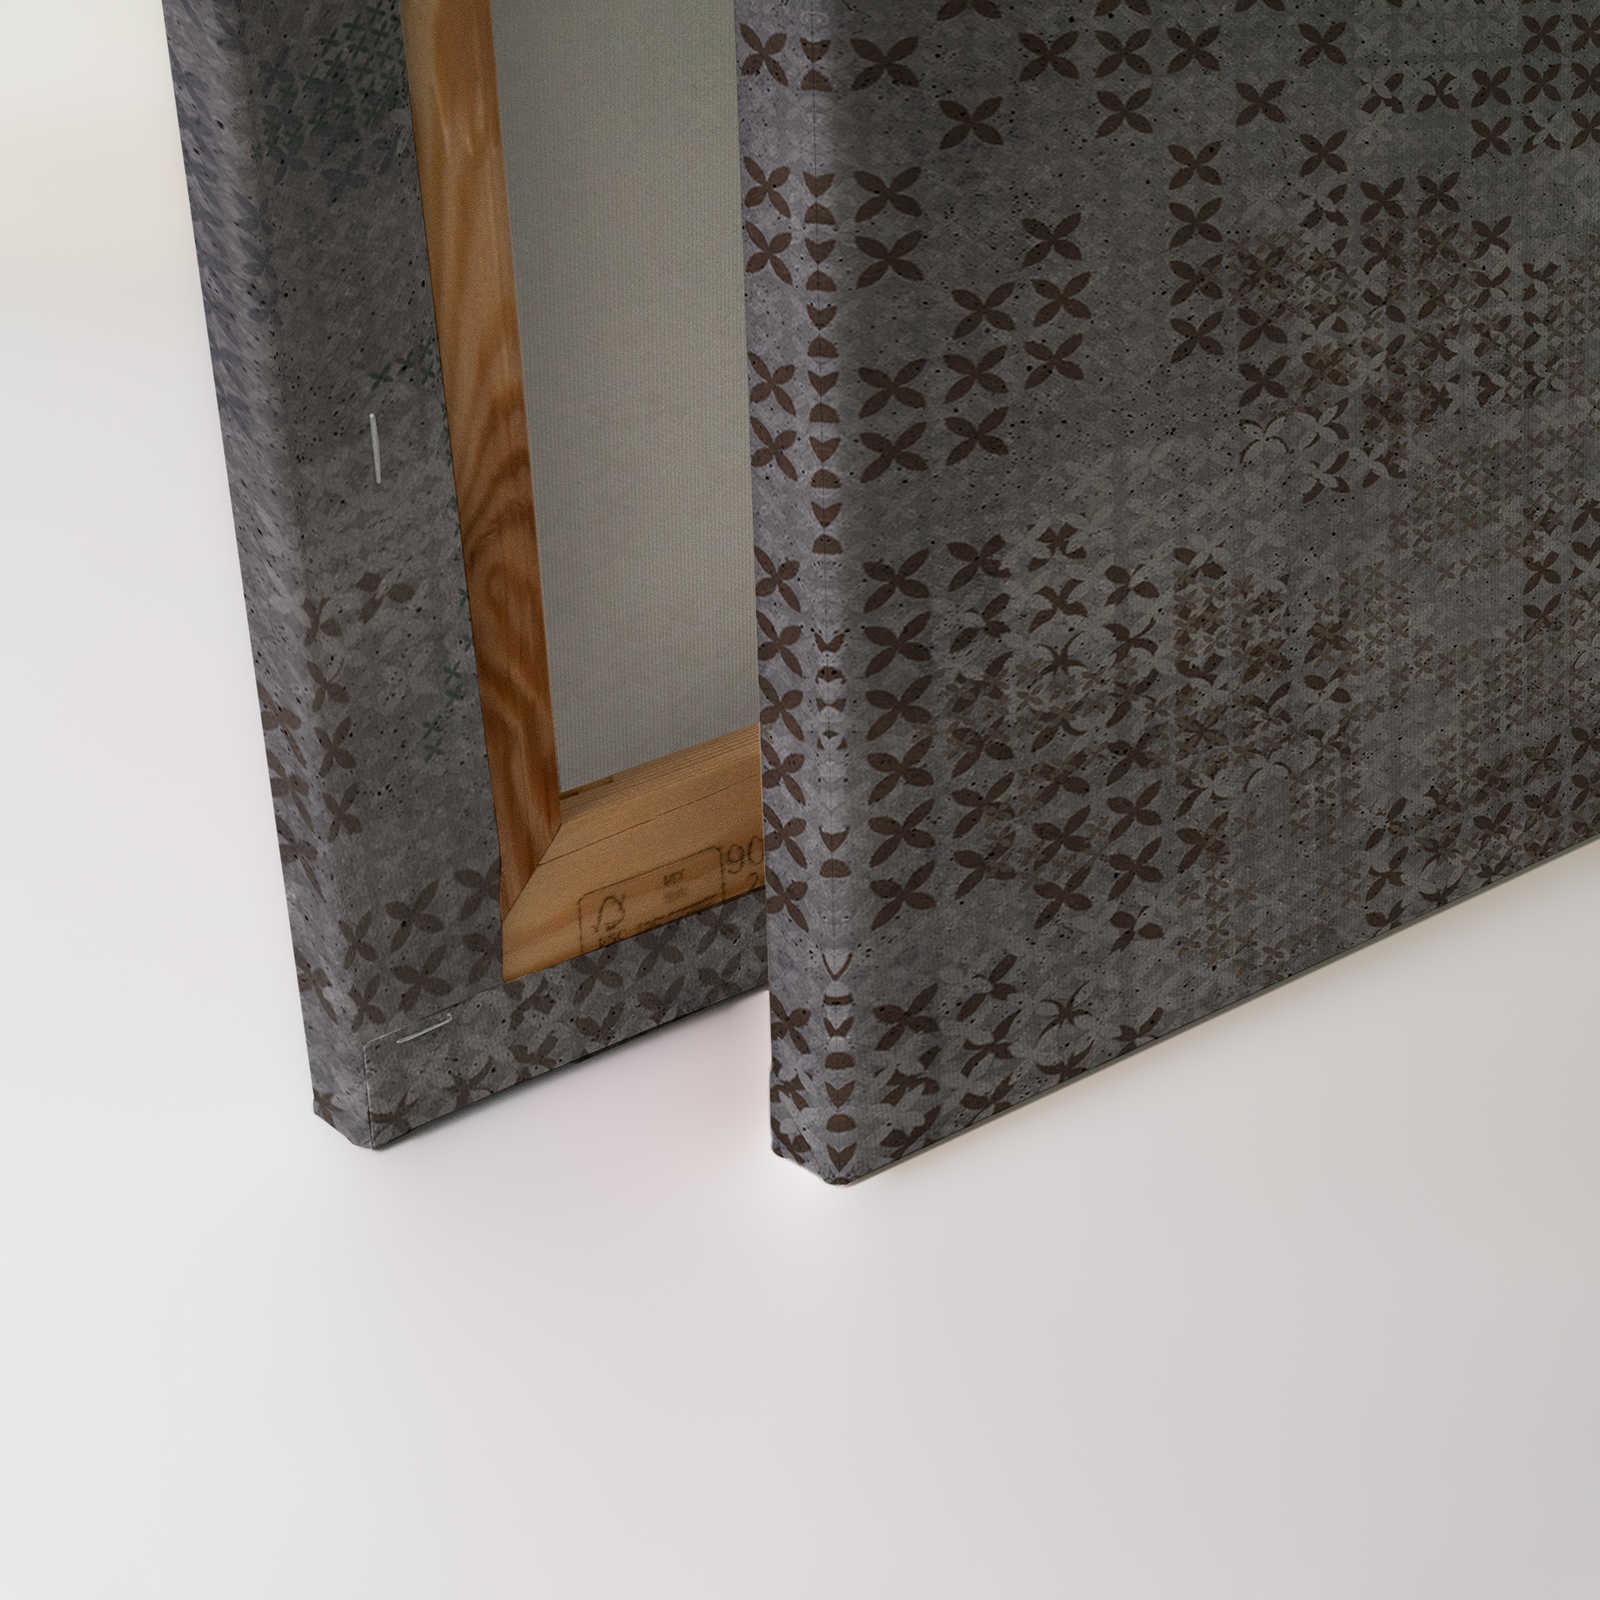             Leinwandbild Kreuz Muster im Pixel-Stil – 0,90 m x 0,60 m
        